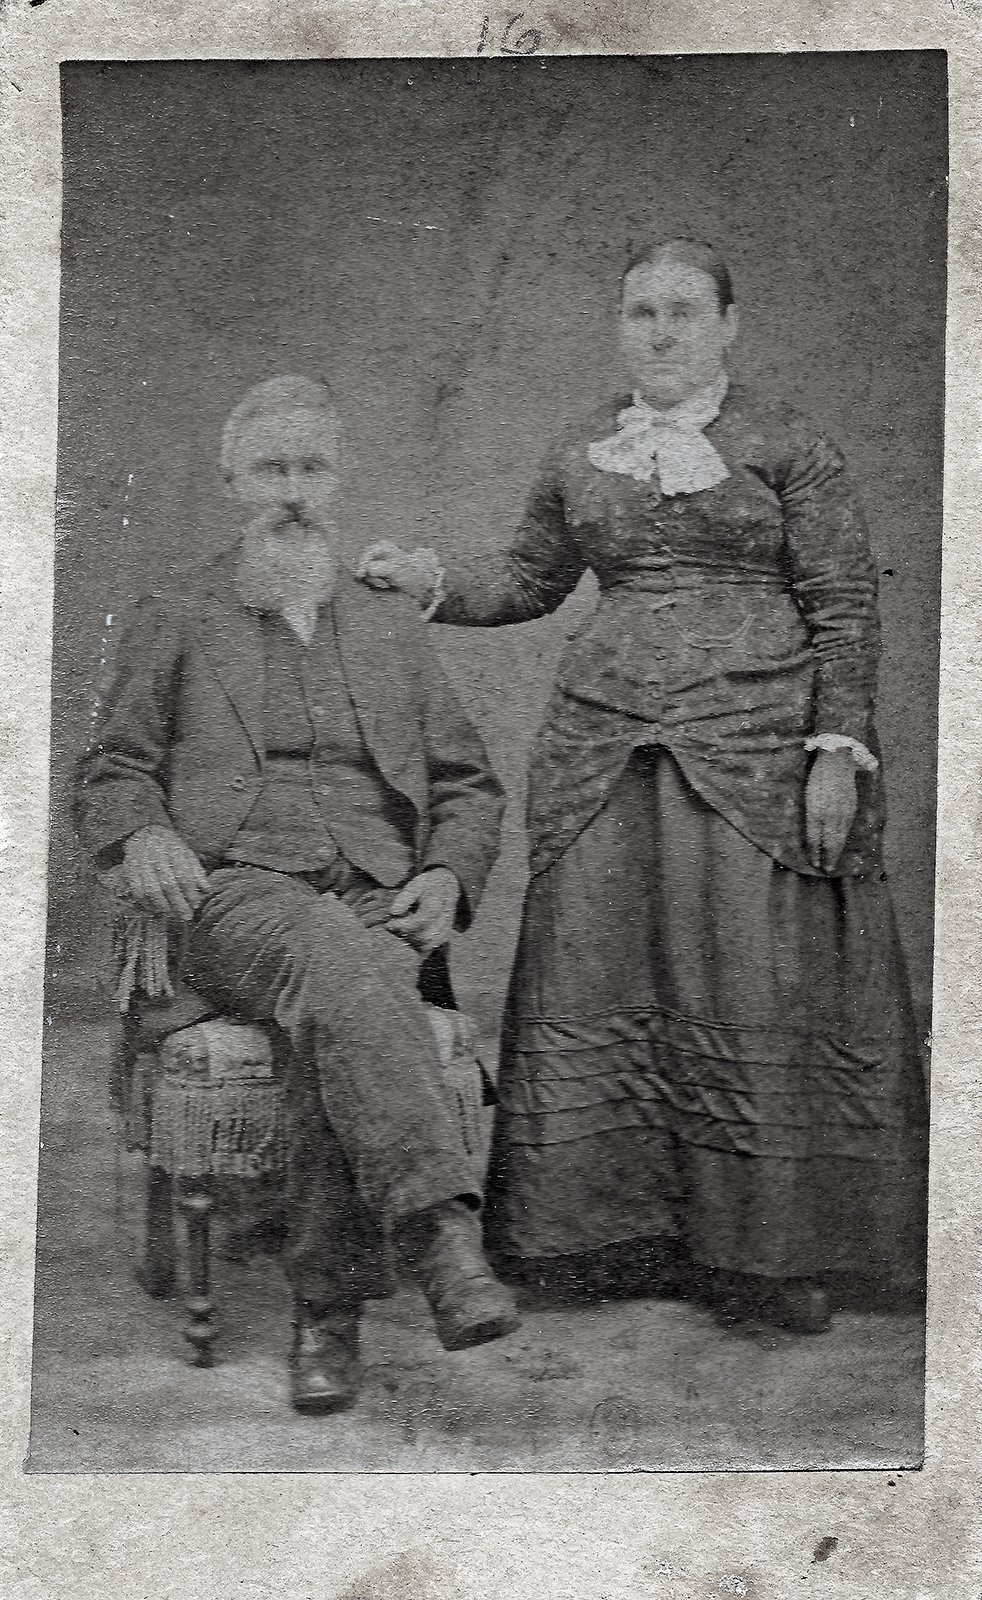 Elizabeth Gardner Yohe and her husband Joseph, c. 1890s.